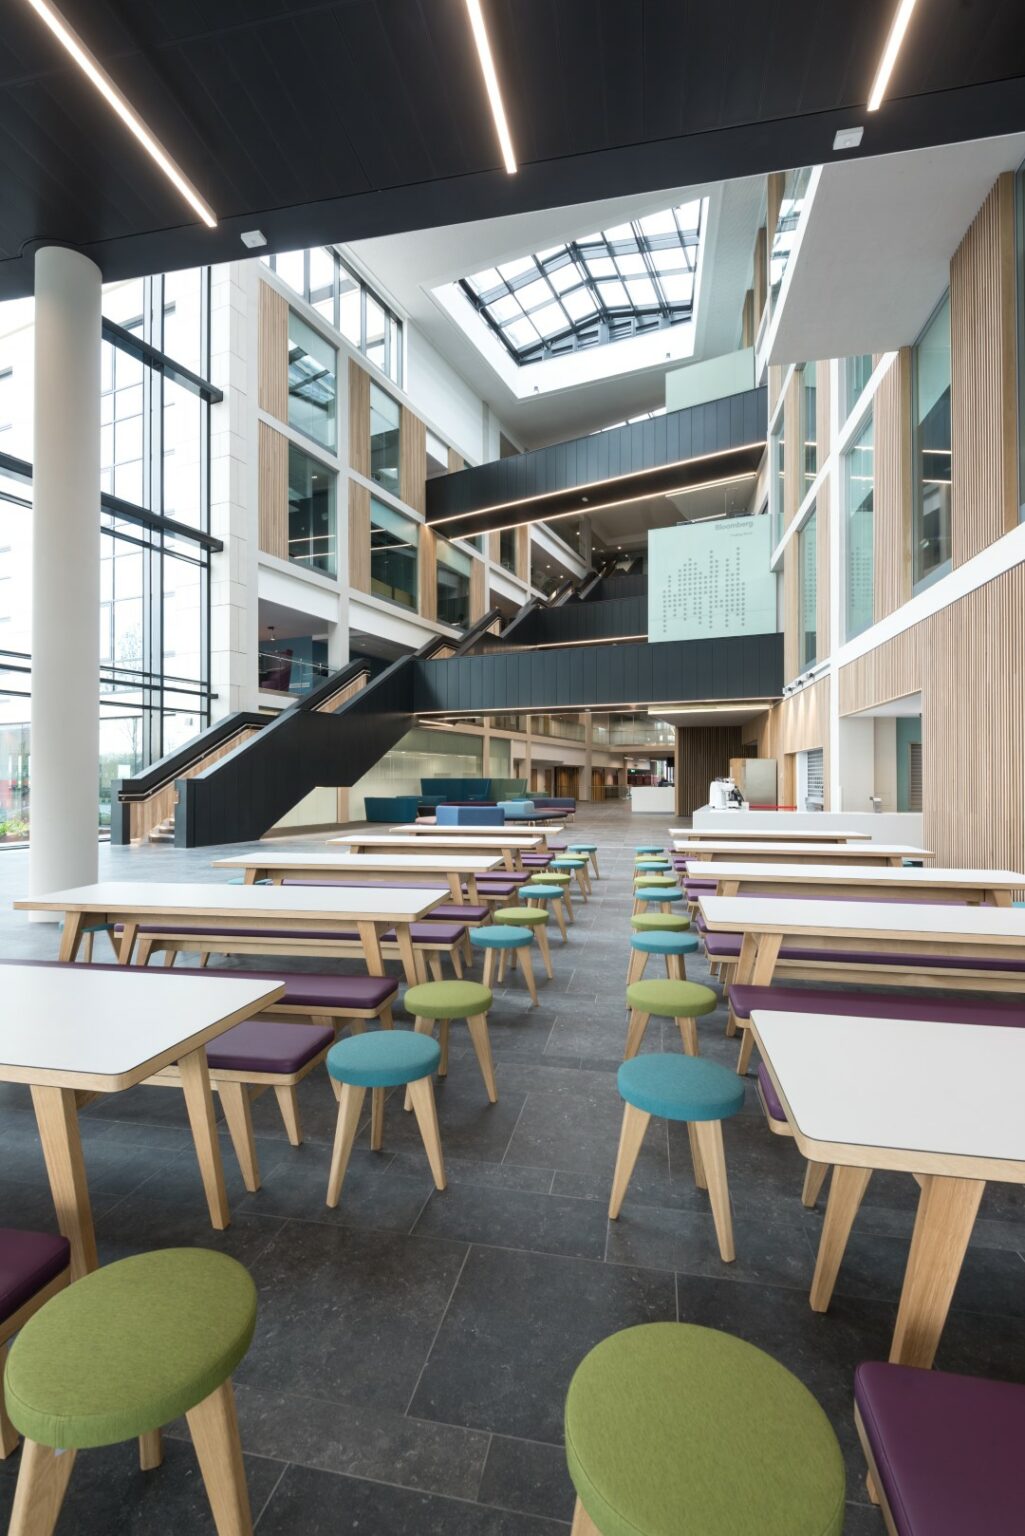 Business School internal dining hall